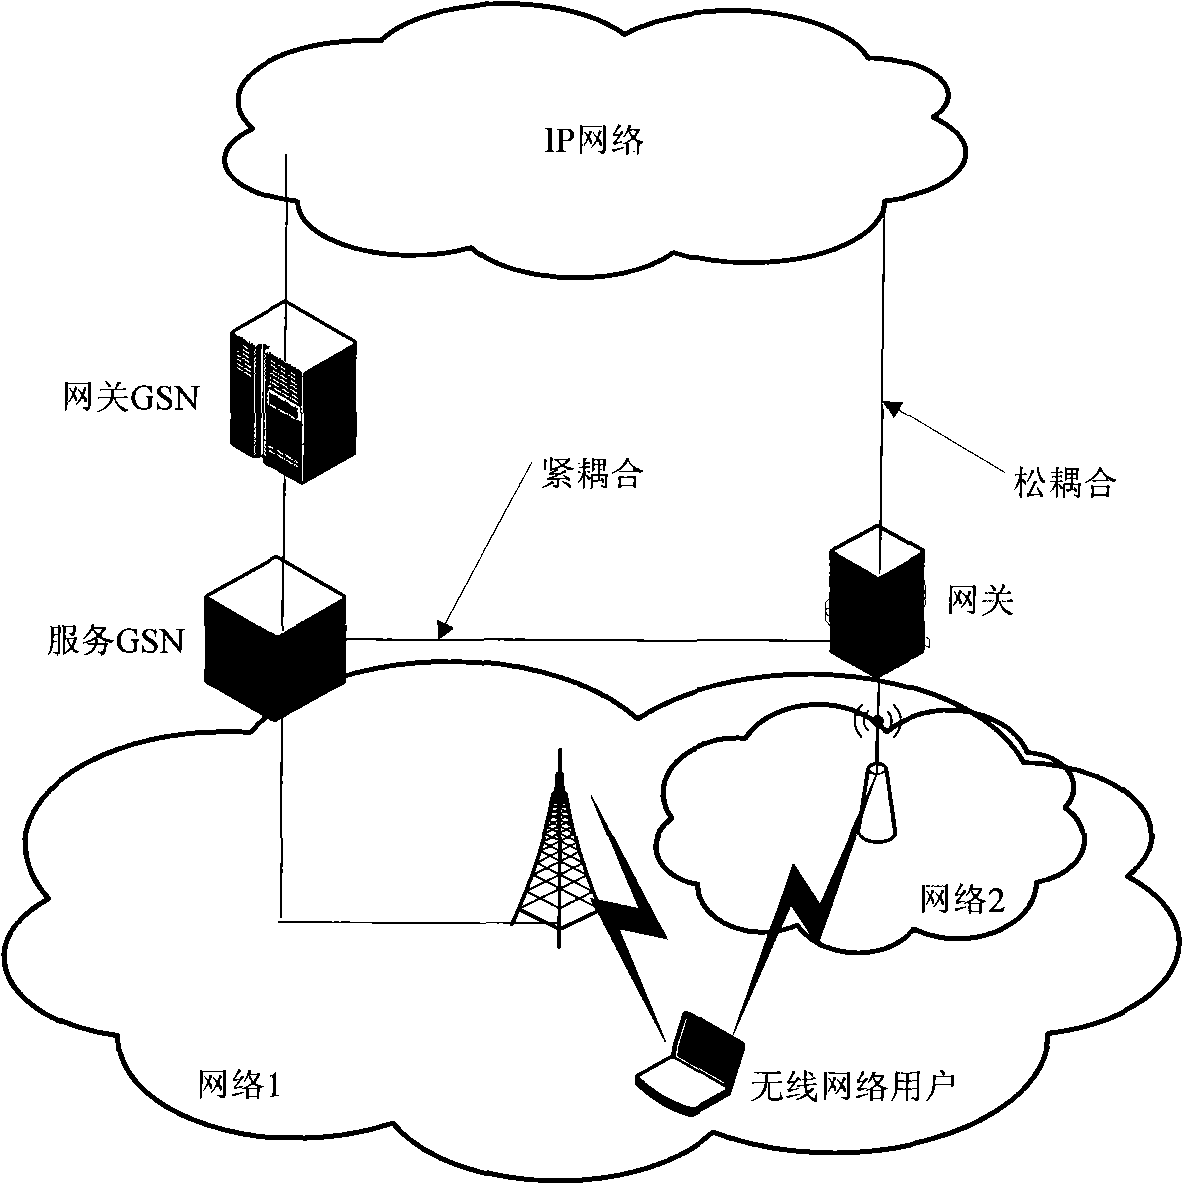 Method for selecting network in heterogeneous network